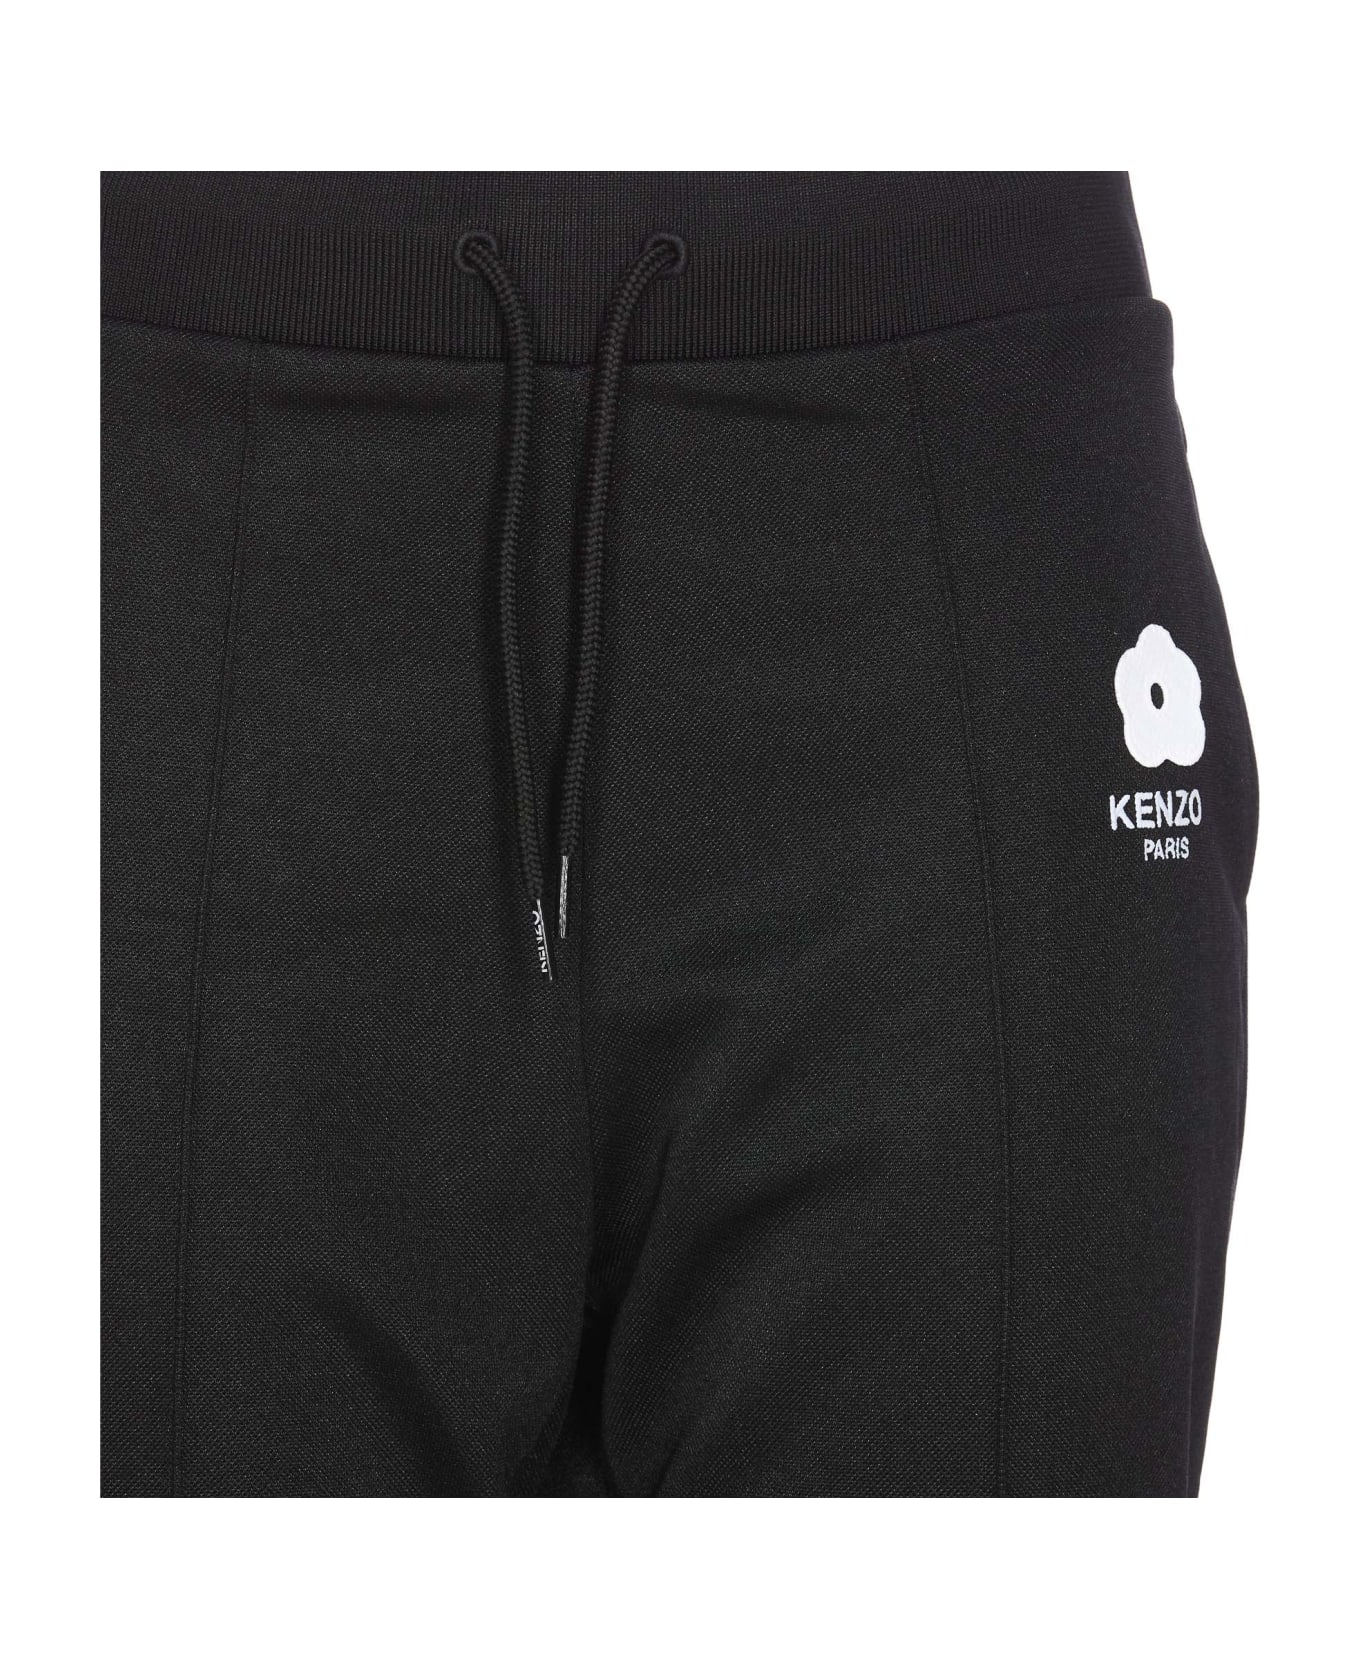 Kenzo Boke 2.0 Pants - Black